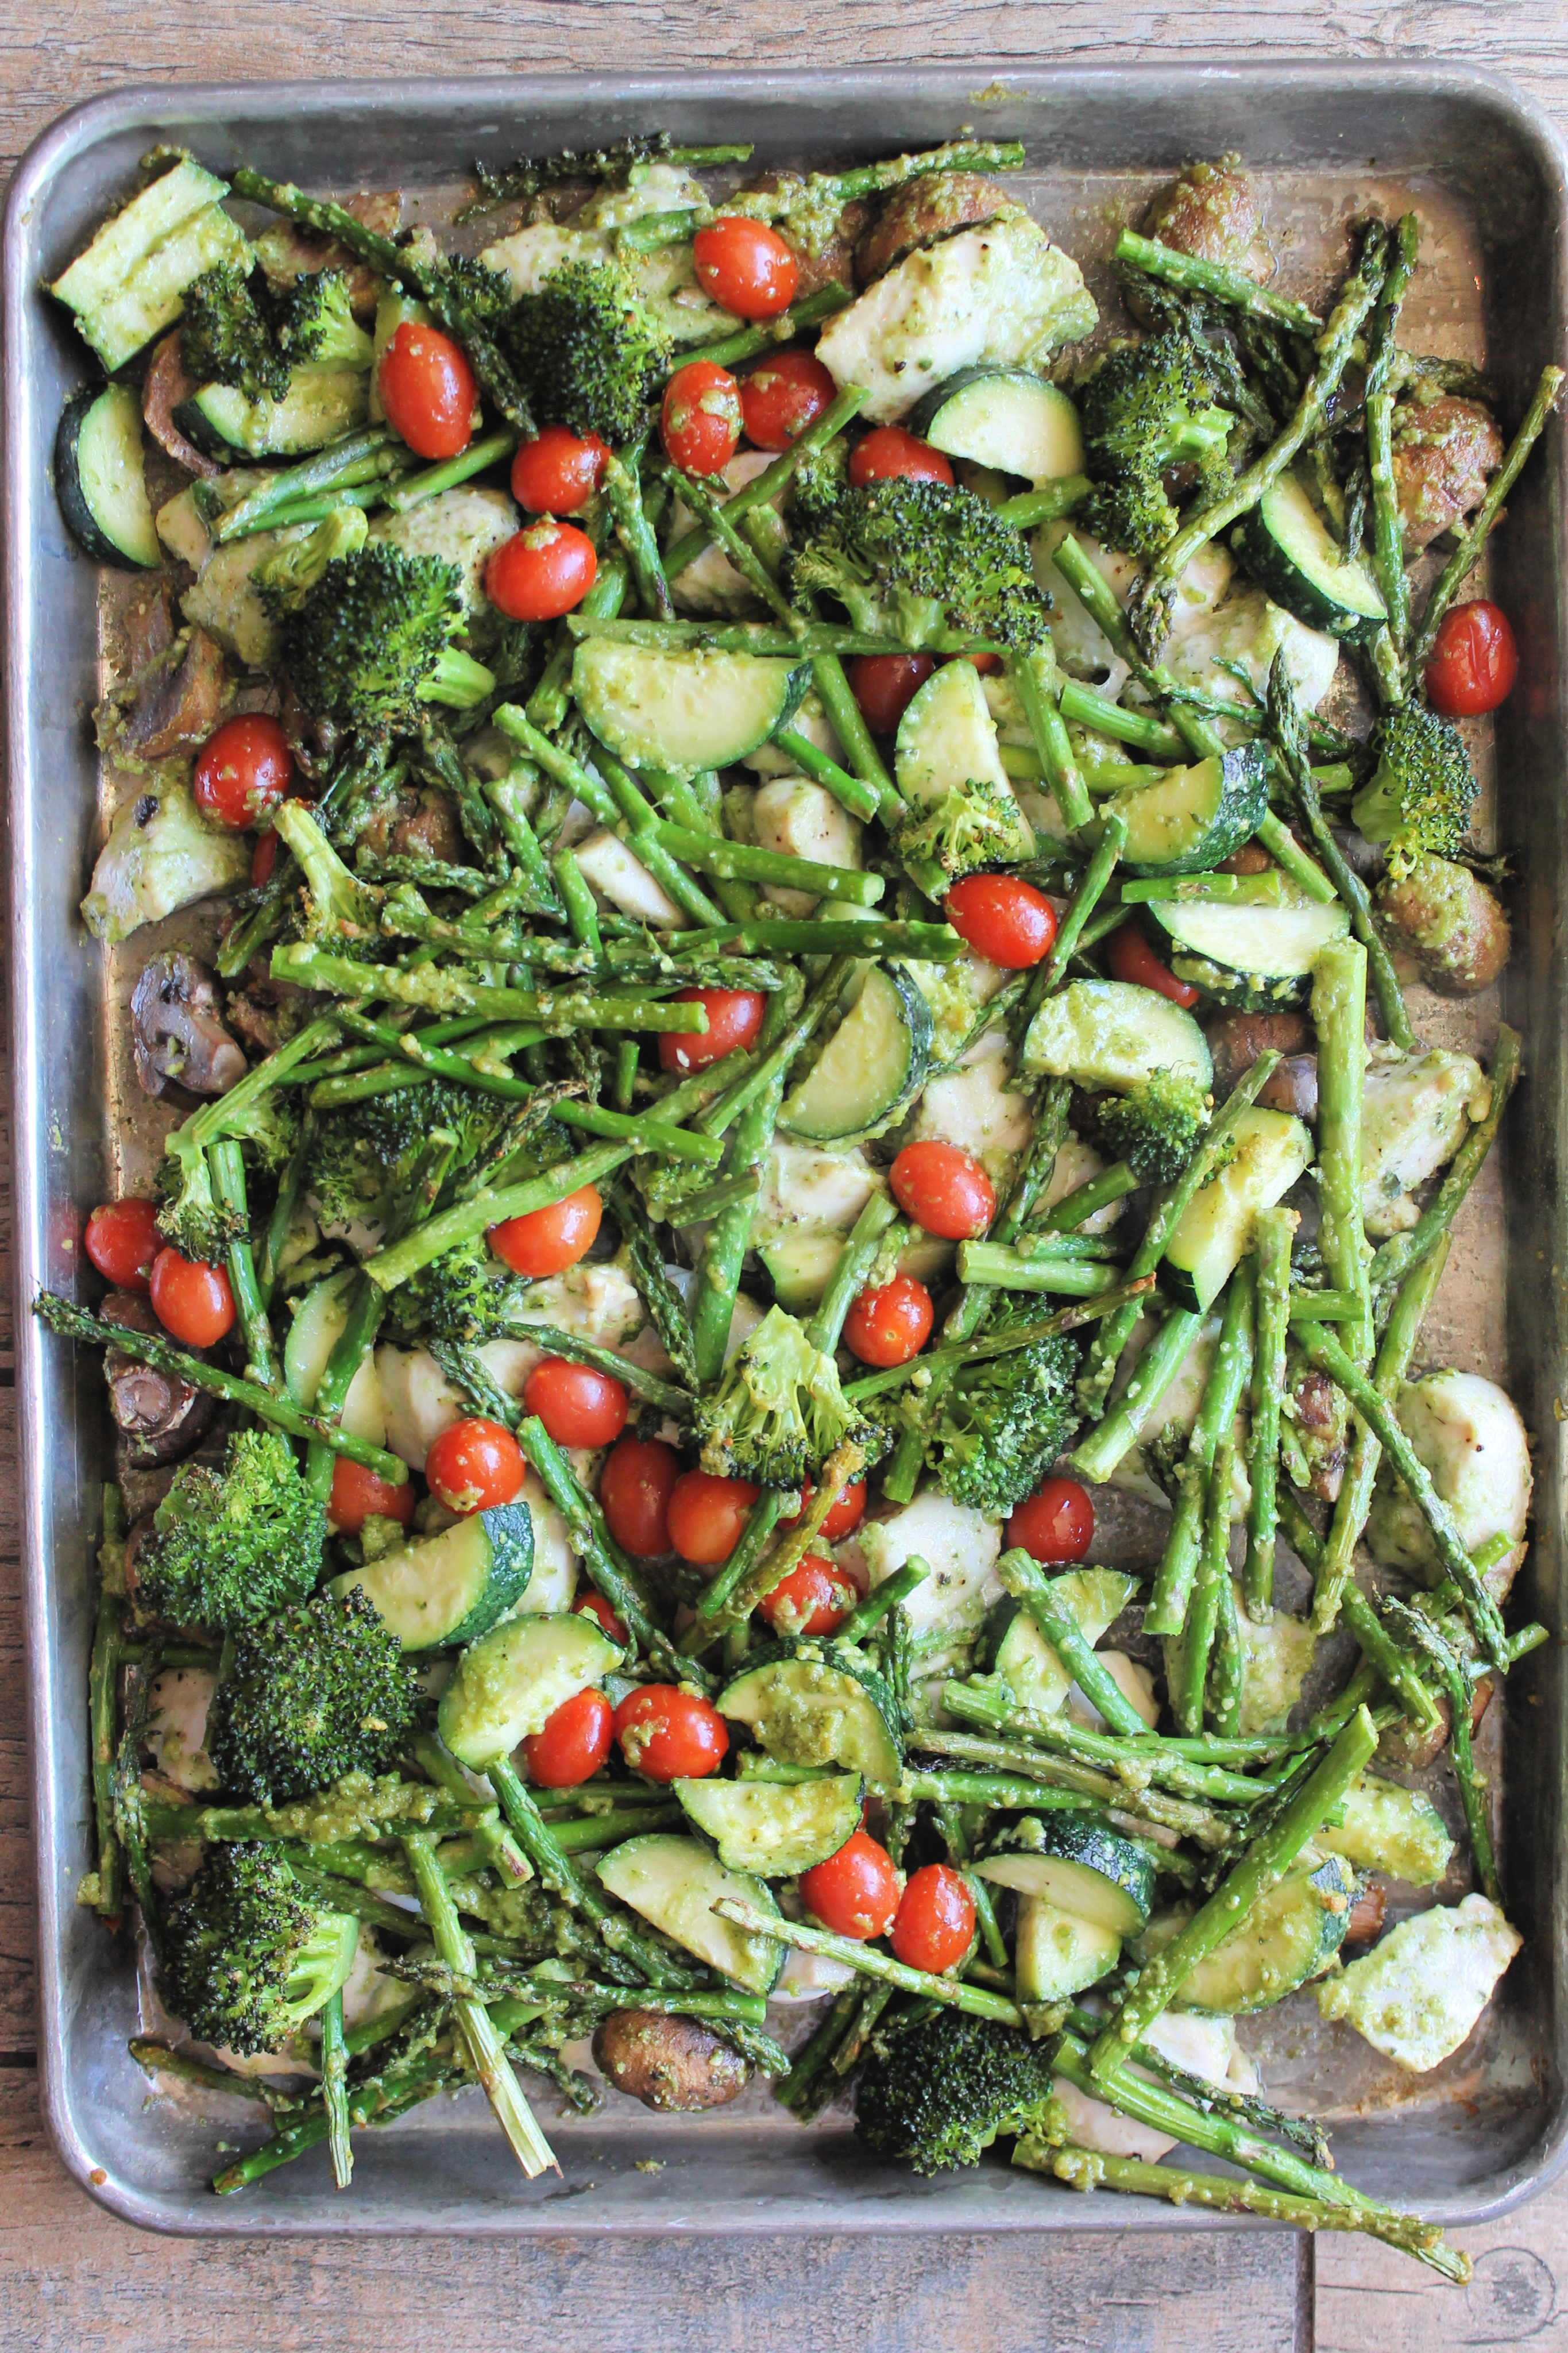 Easy sheet pan pesto chicken and veggies